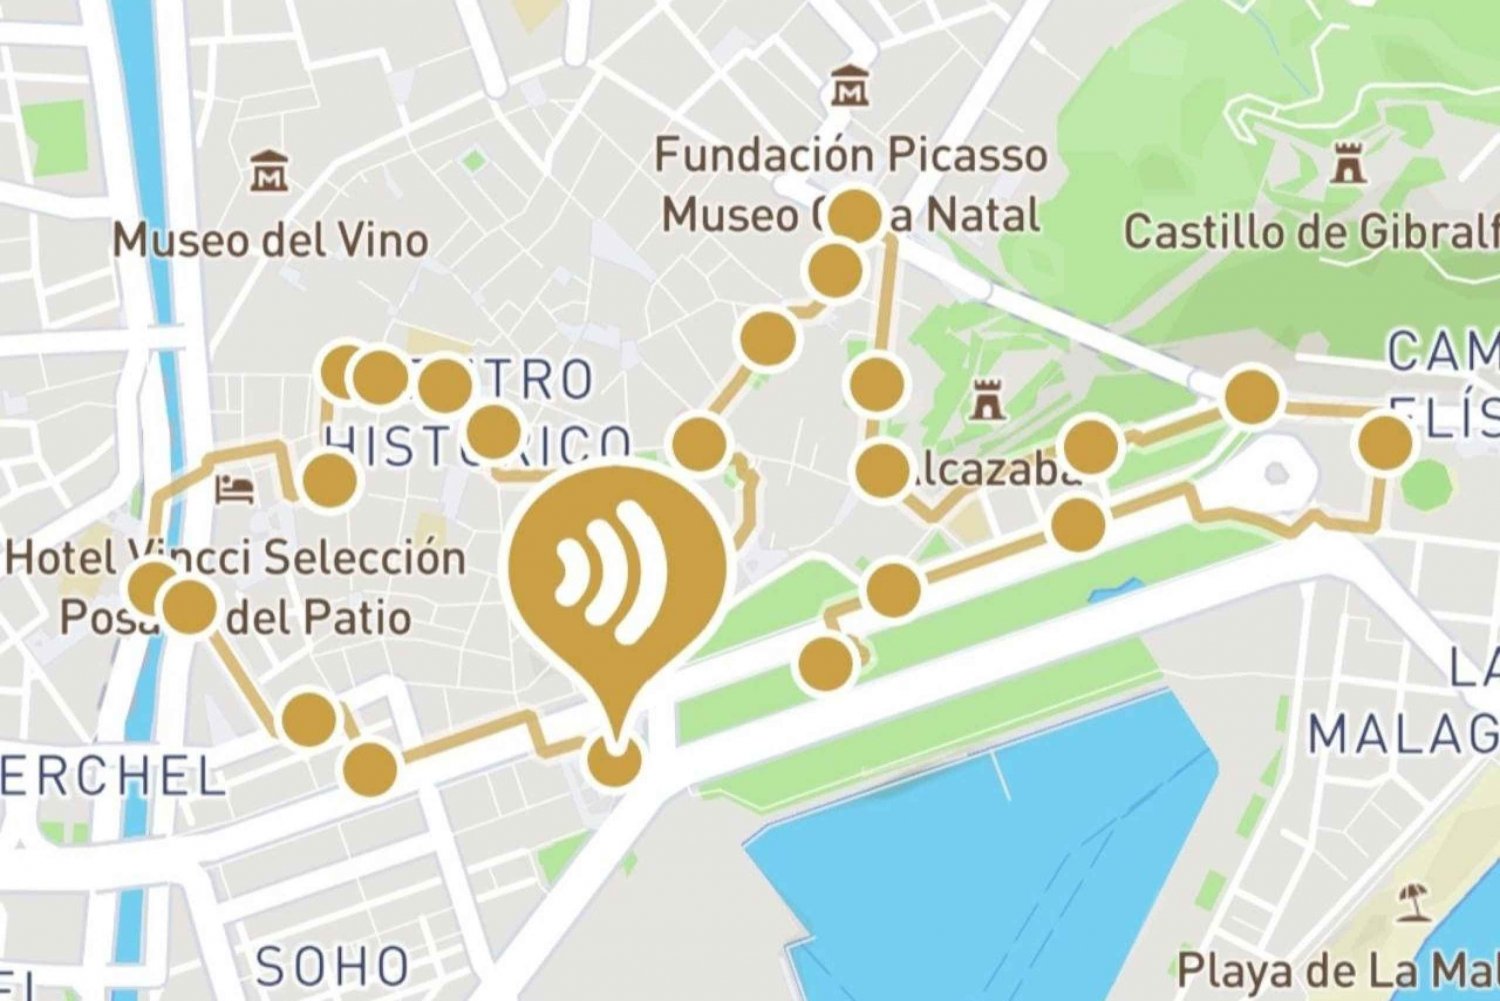 Audioguide City Walk Malaga for cruises (German & English)